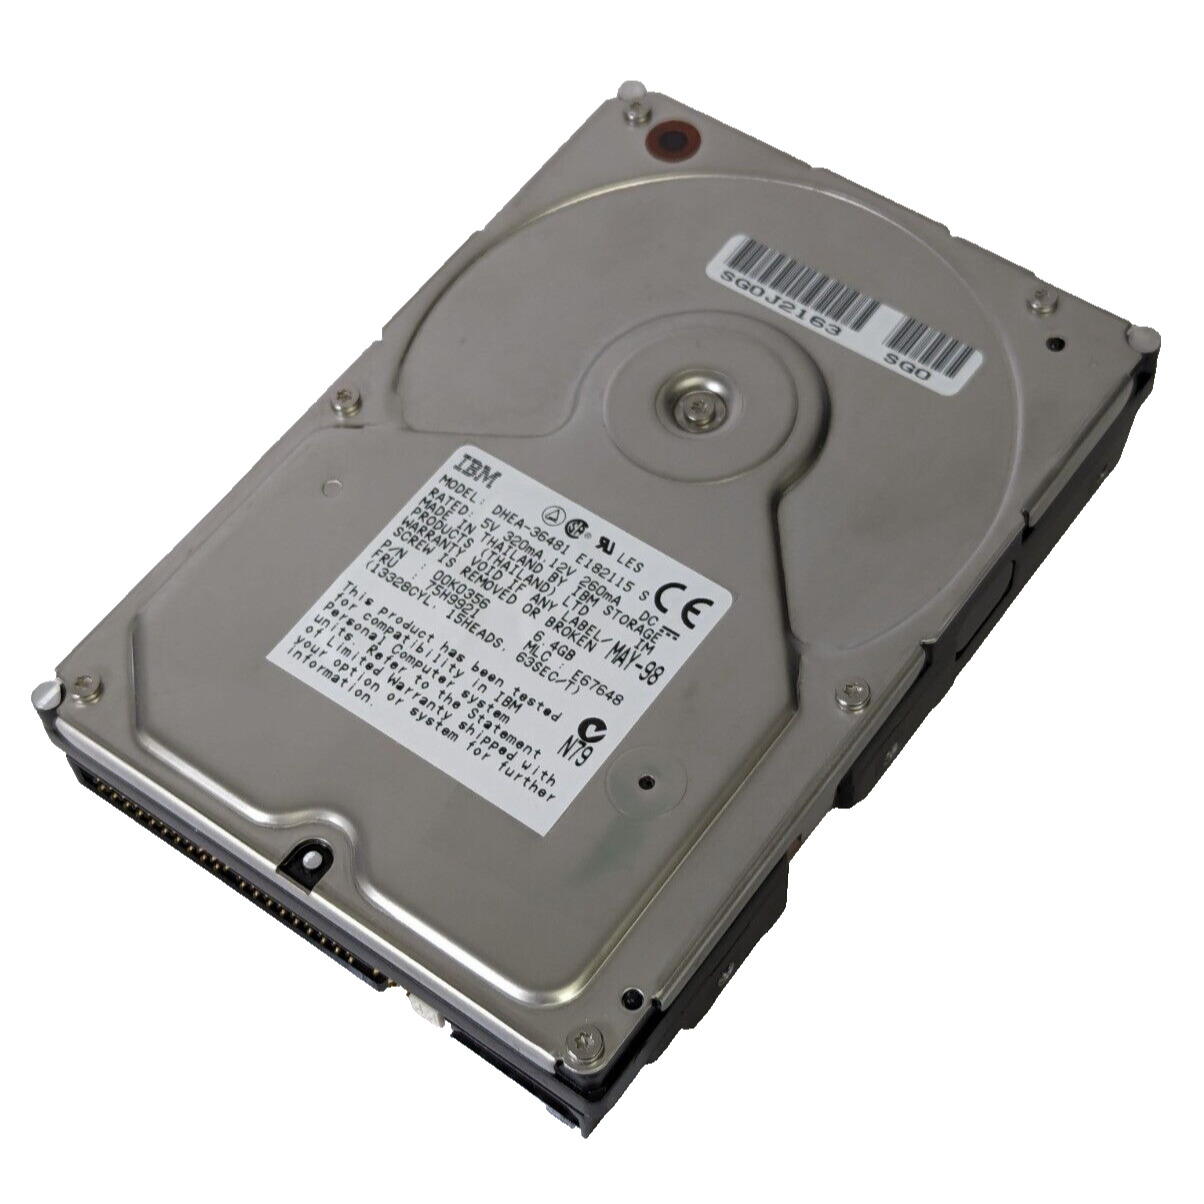 IBM DHEA-36481 Deskstar 8 6.4GB 5400RPM Ultra ATA/33 (ATA-4) 3.5-Inch Hard Drive